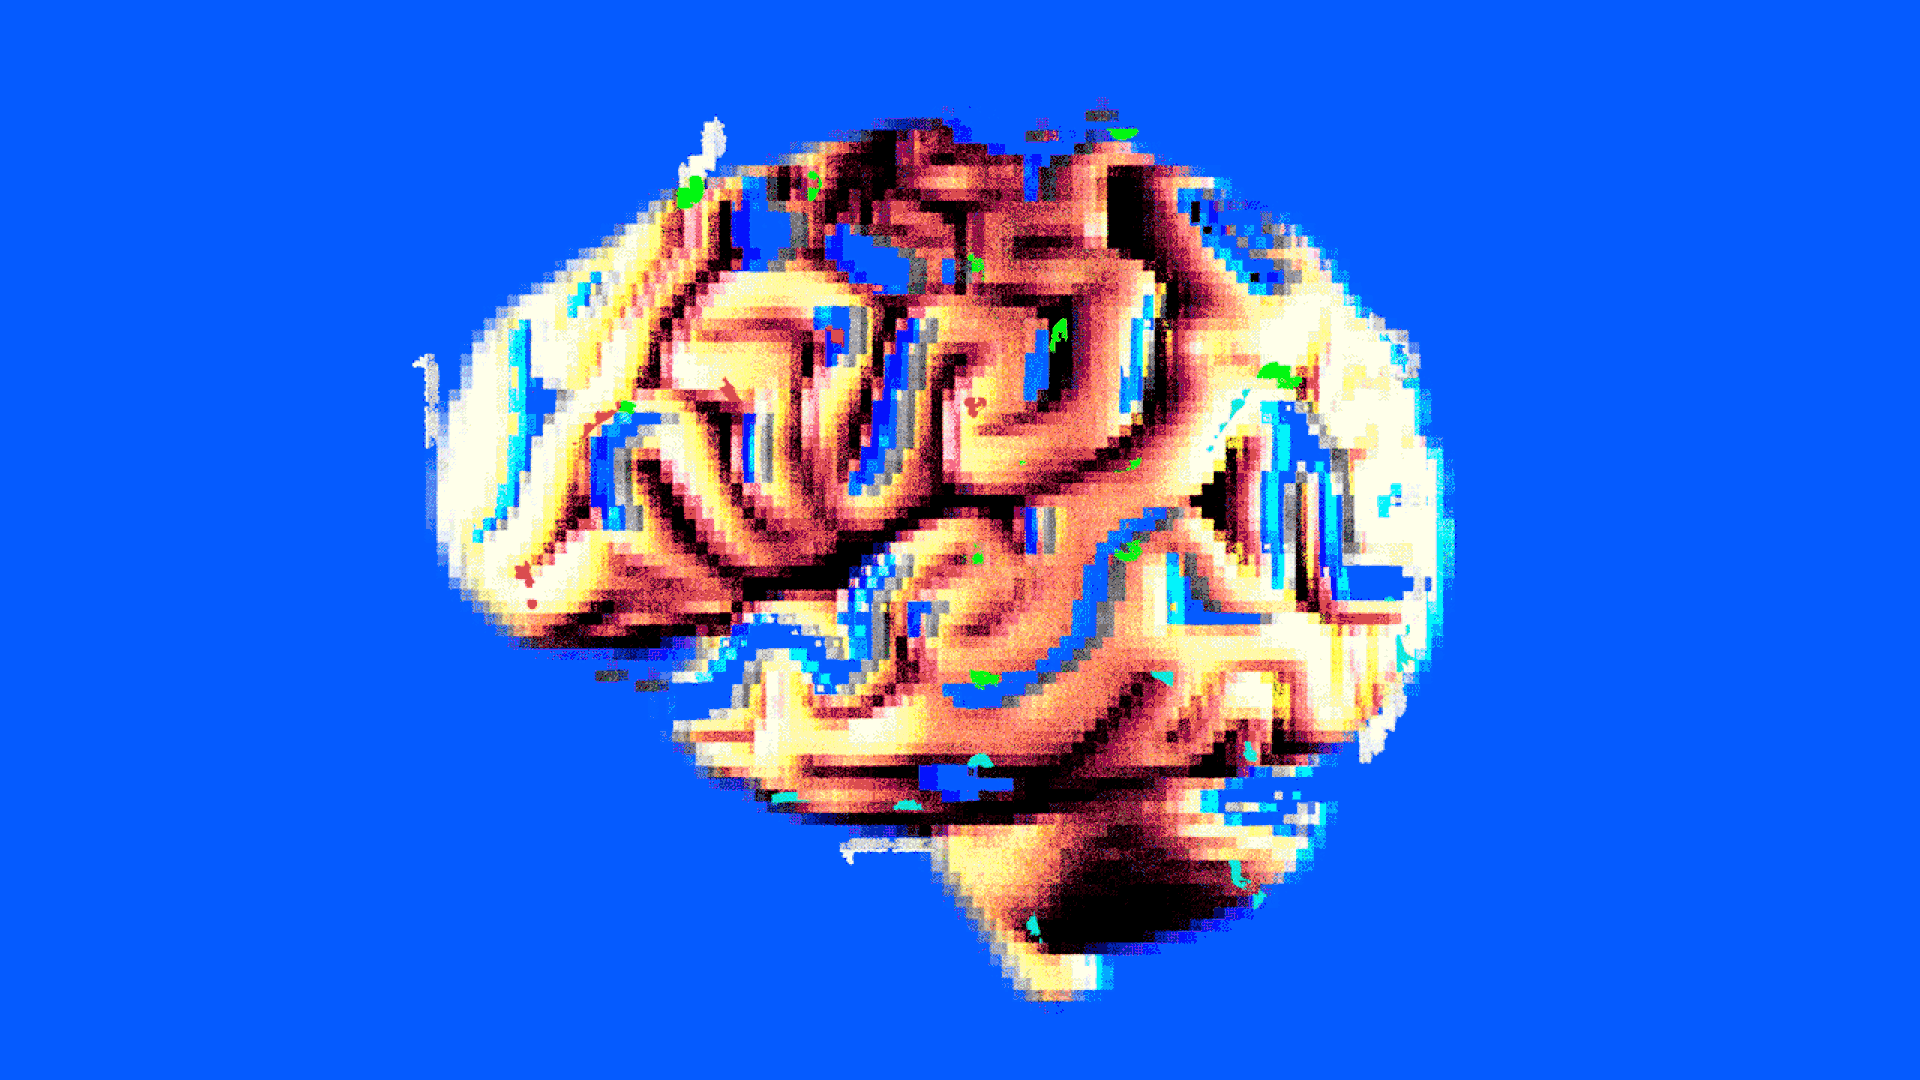 GIF of brain